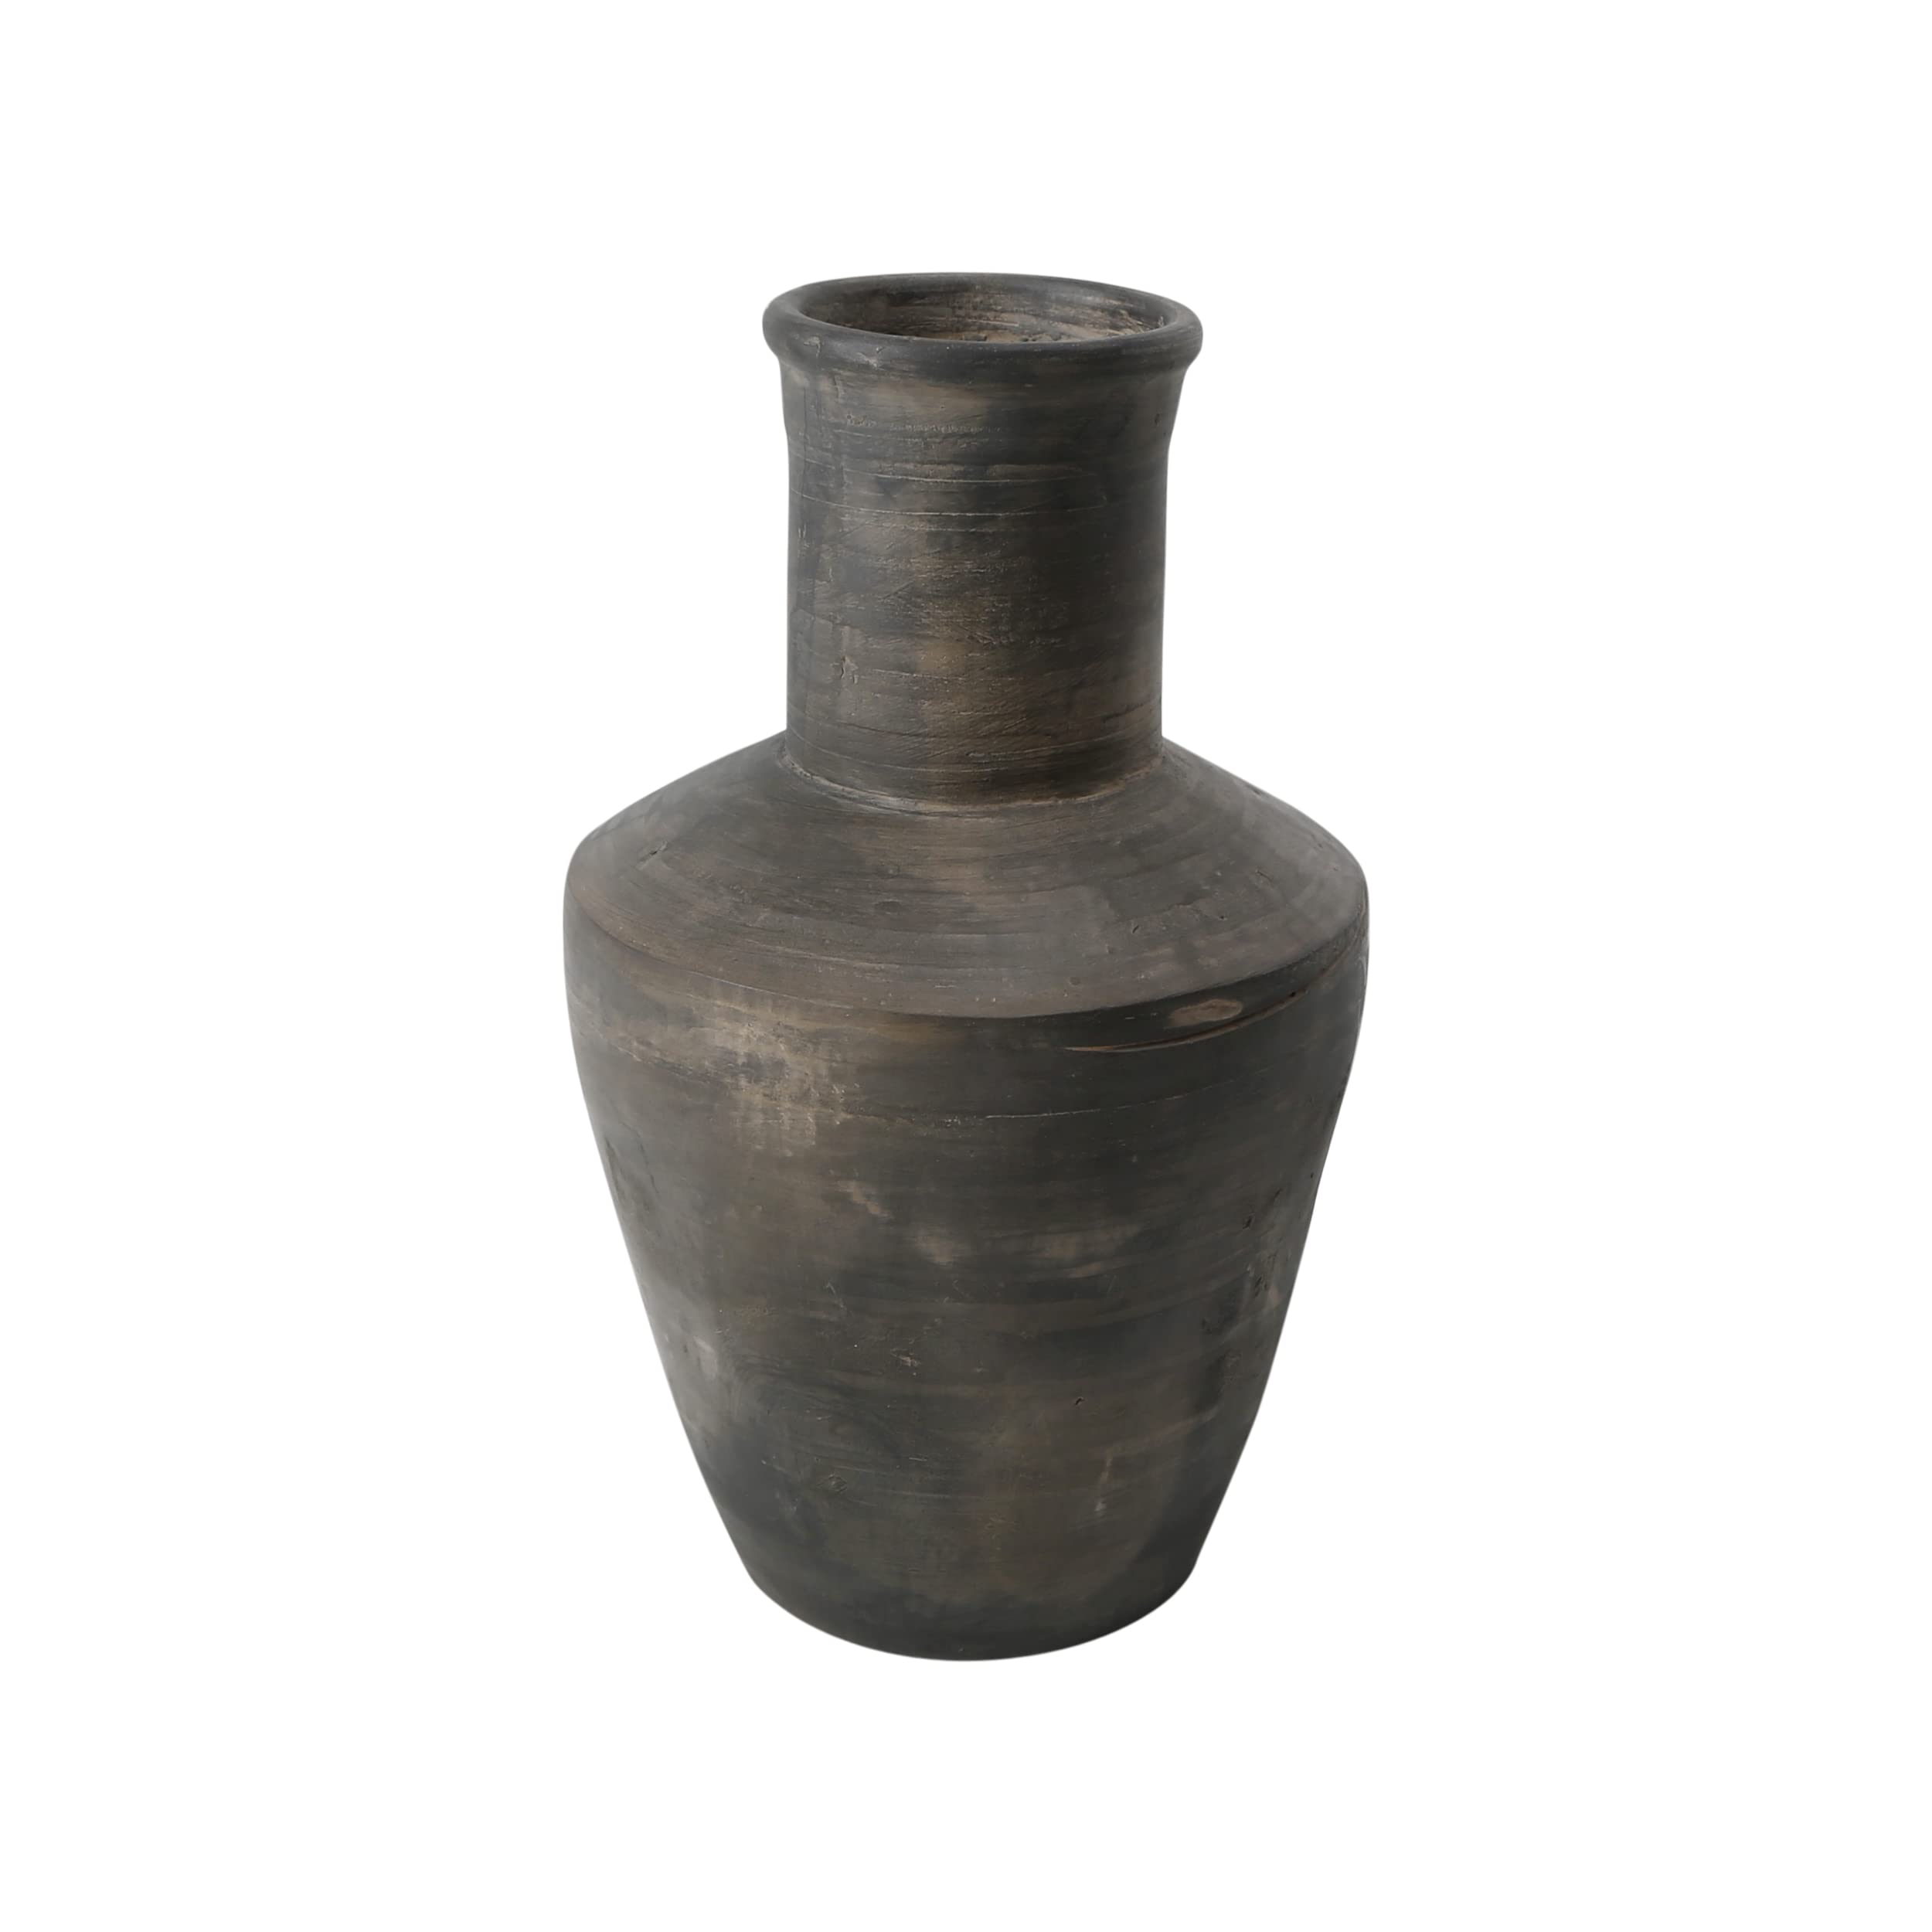 Artissance AM80641206 Earthy Gray Long Neck Pottery, 15 Inch Tall Vase (Décor)